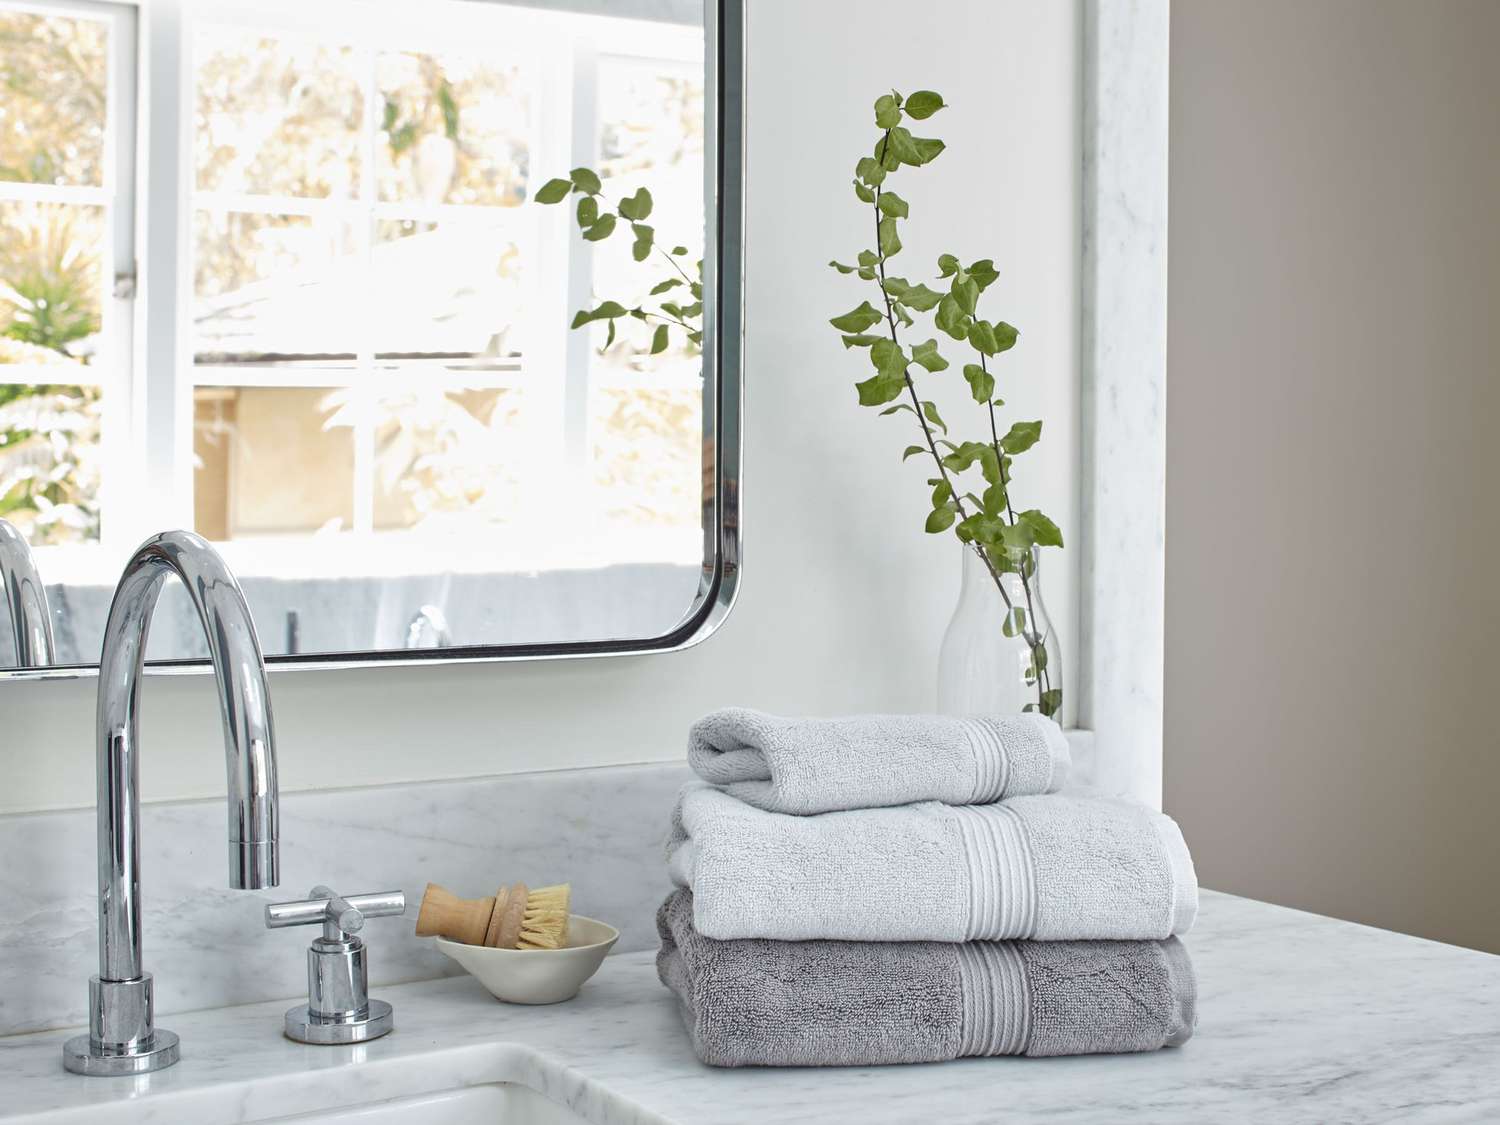 set of gray bath towels folded on bathroom counter